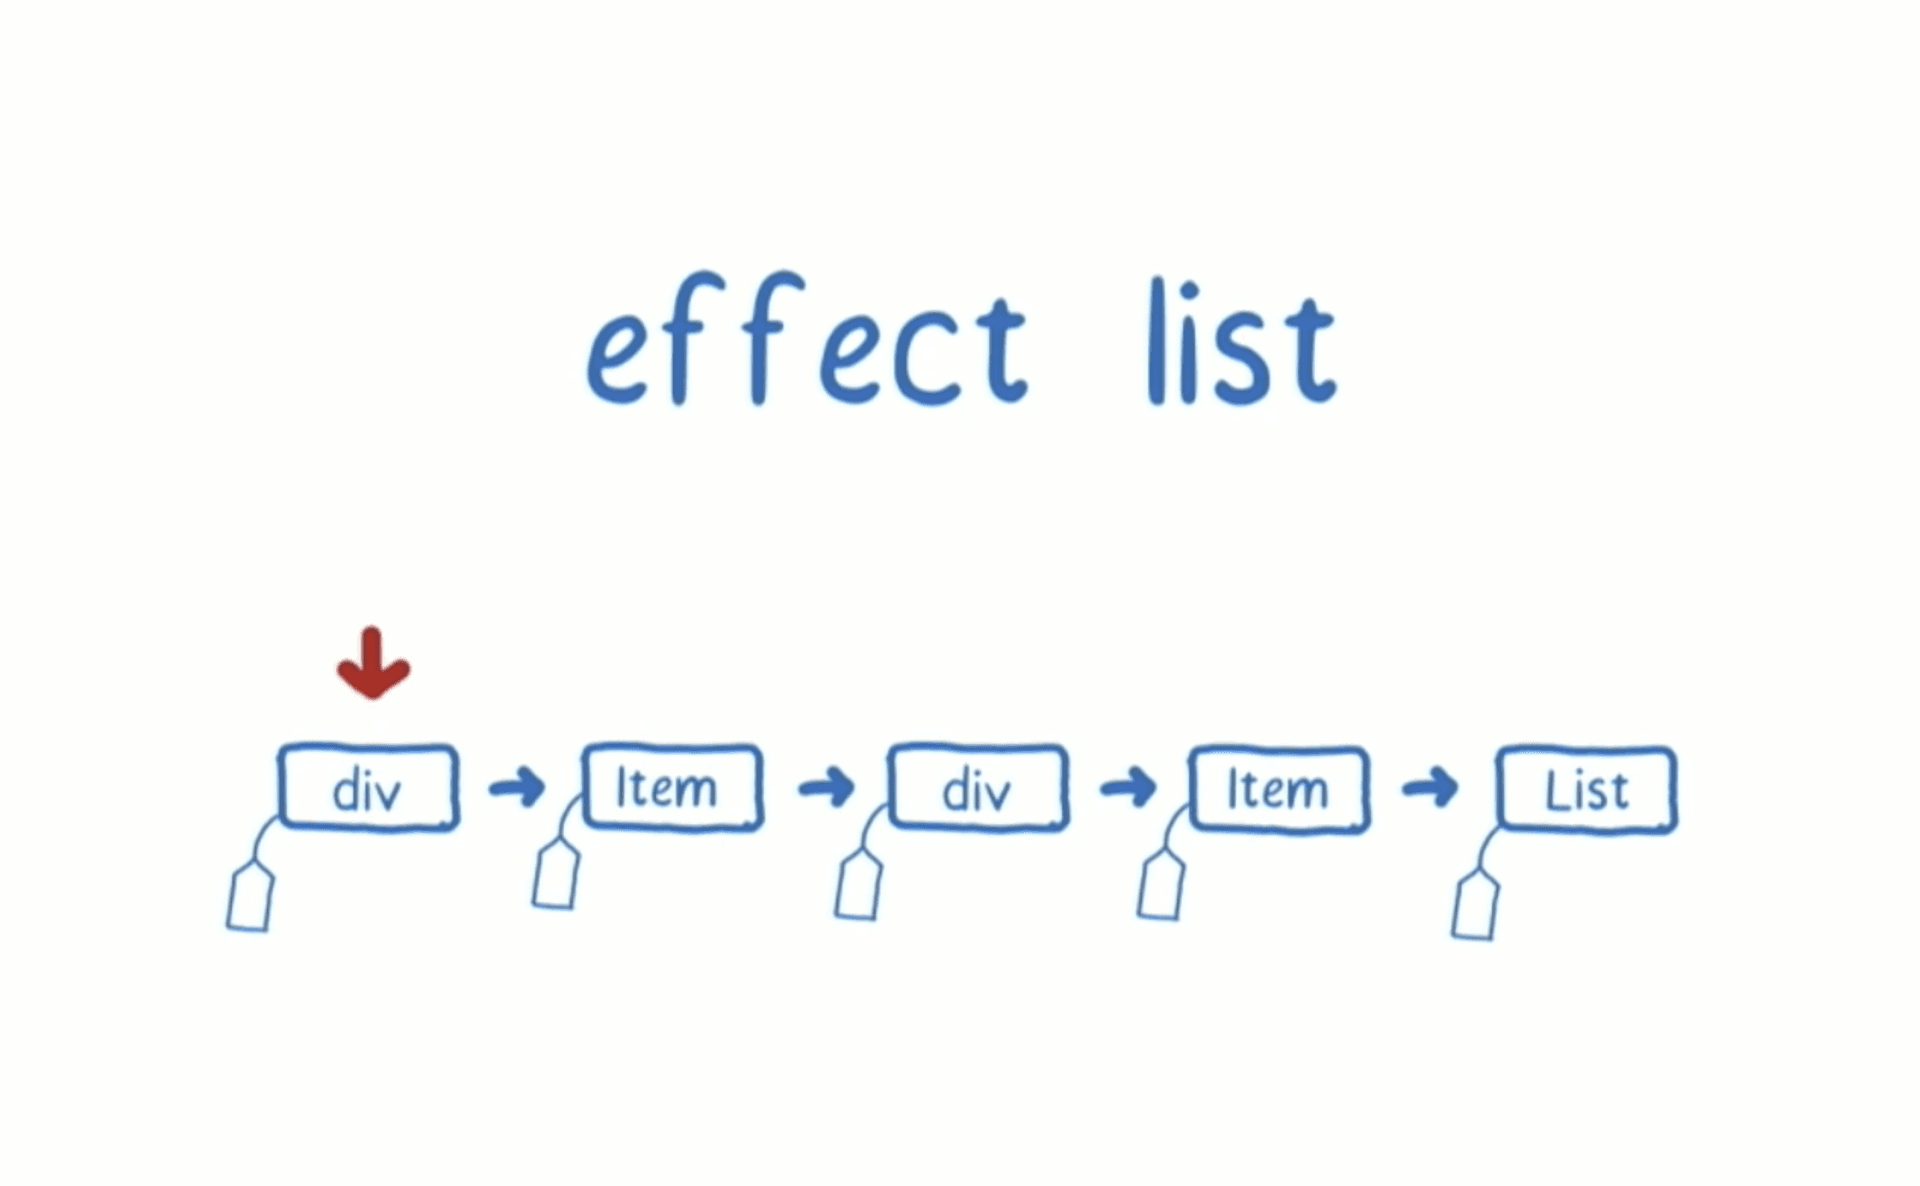 Re: Effect list